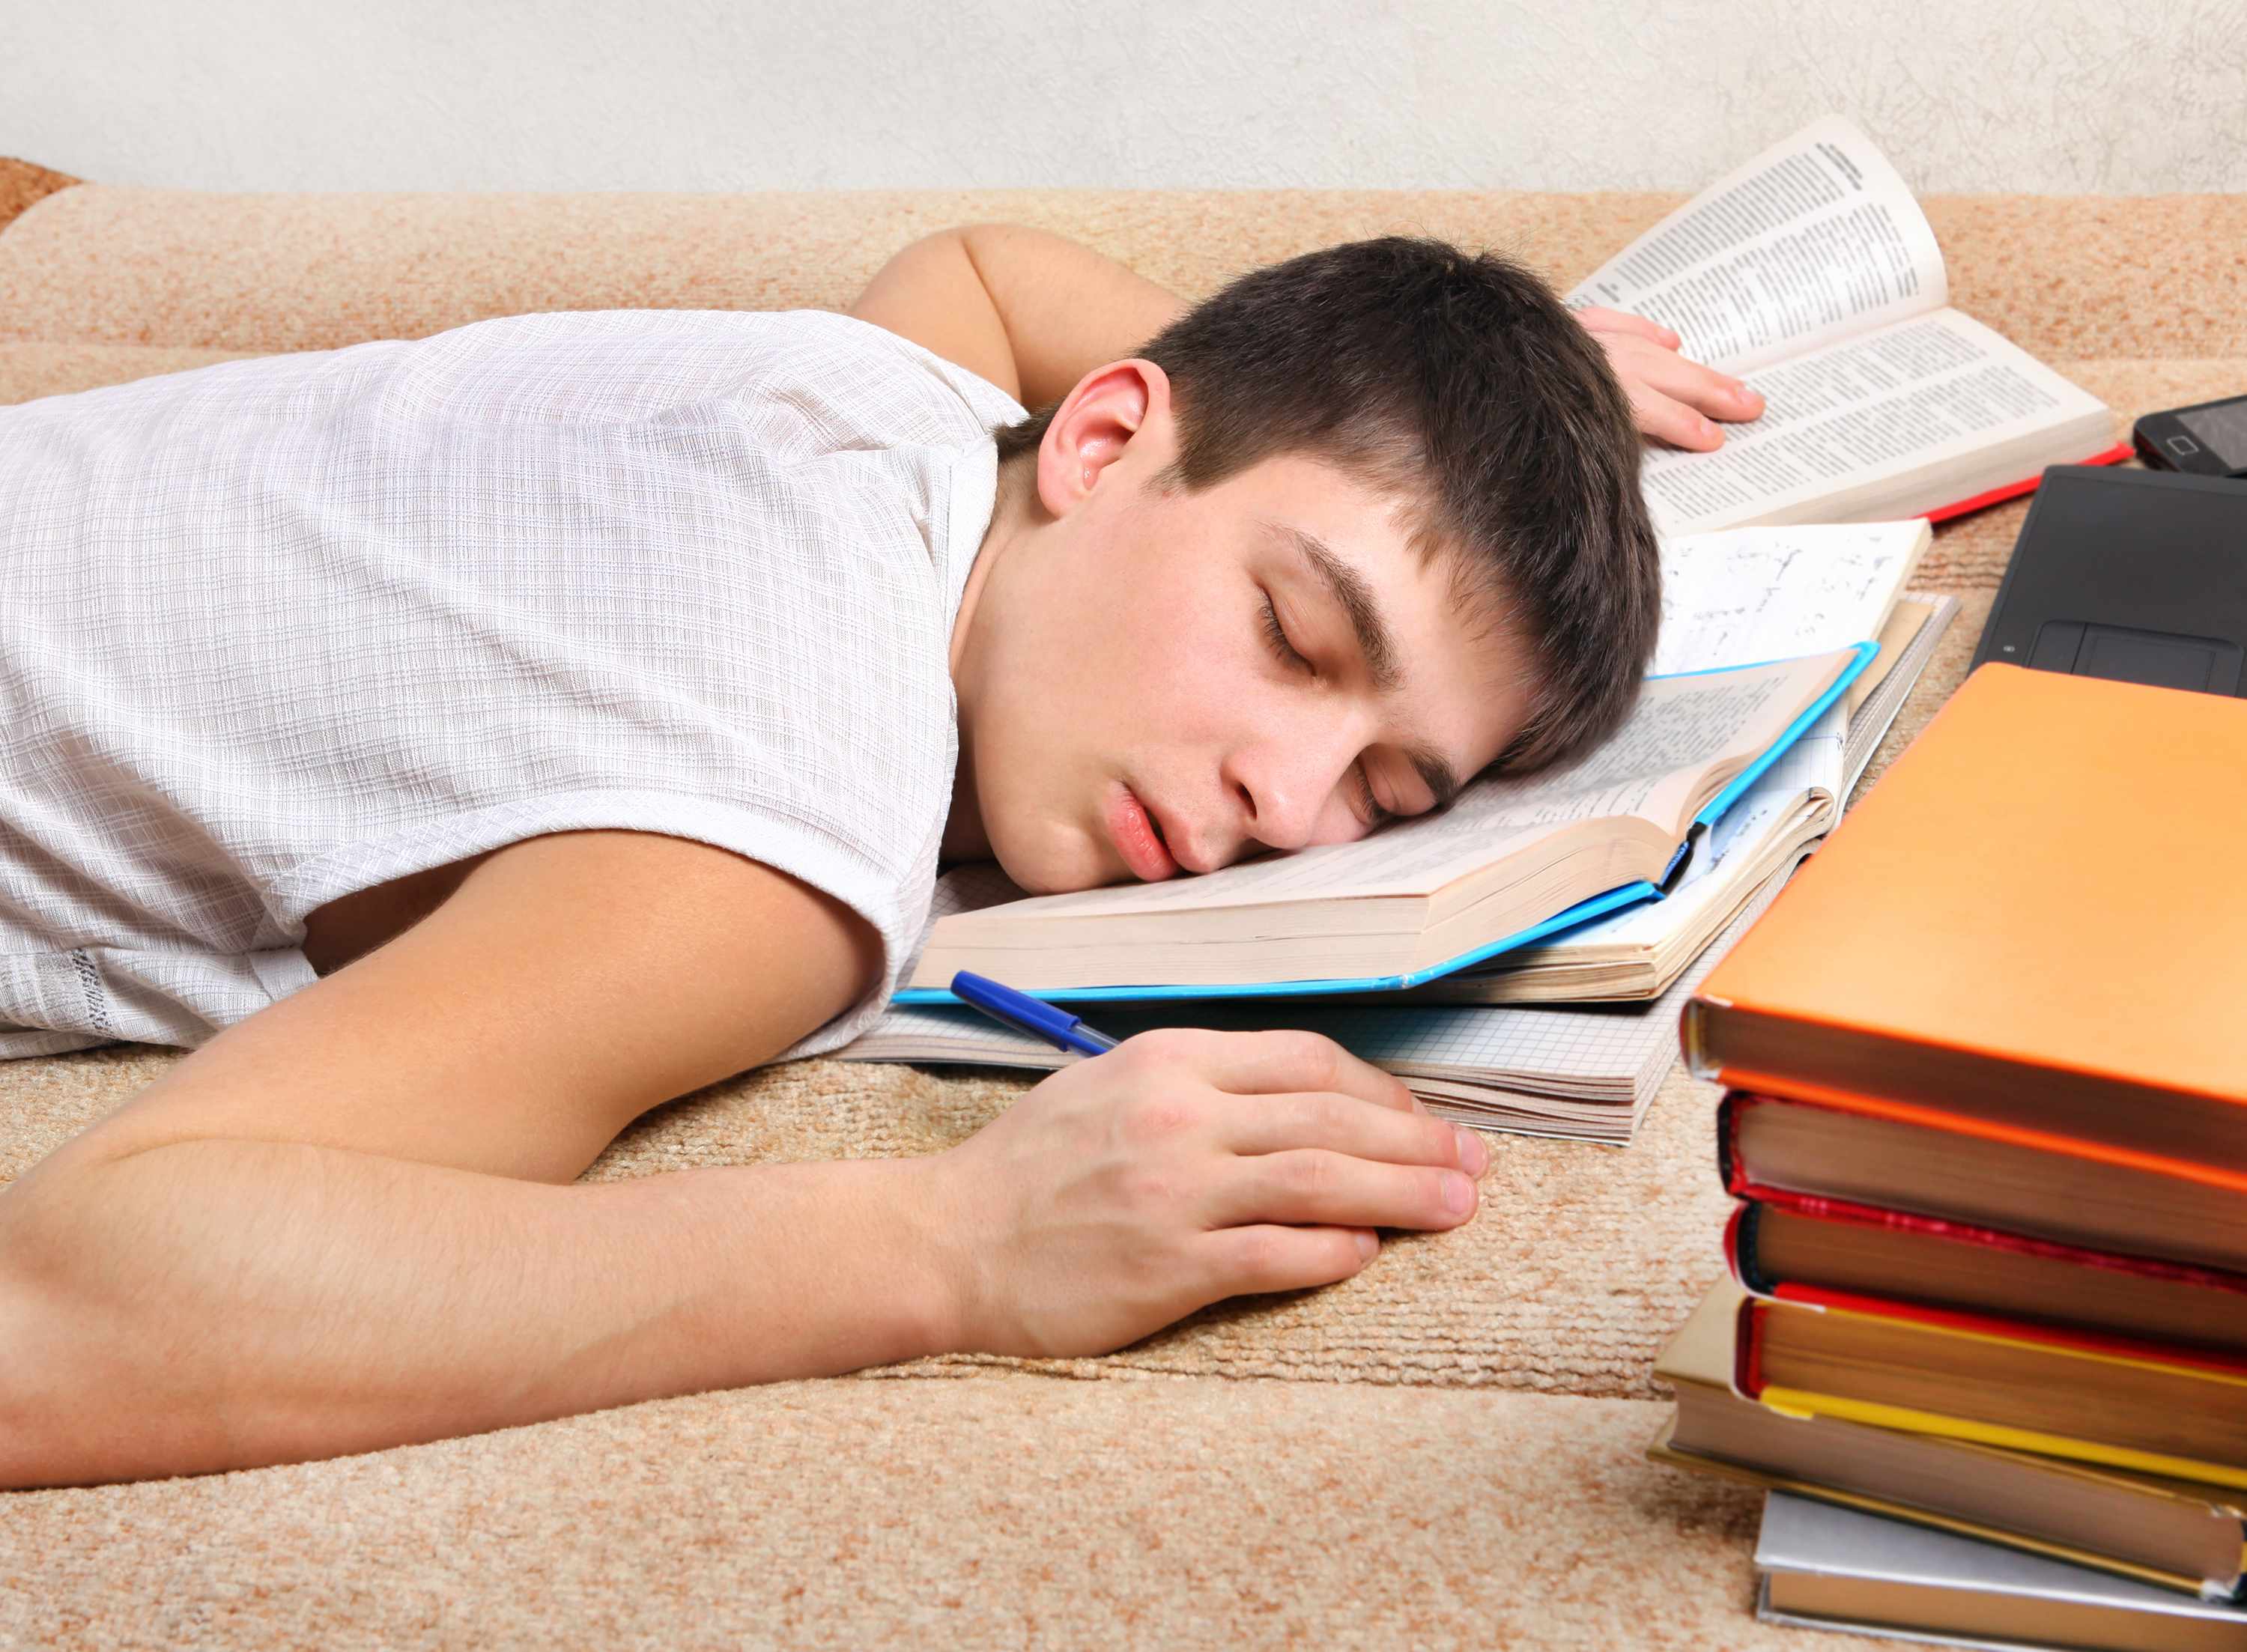 Сплю со студенткой. Сон студента. Сонный студент.